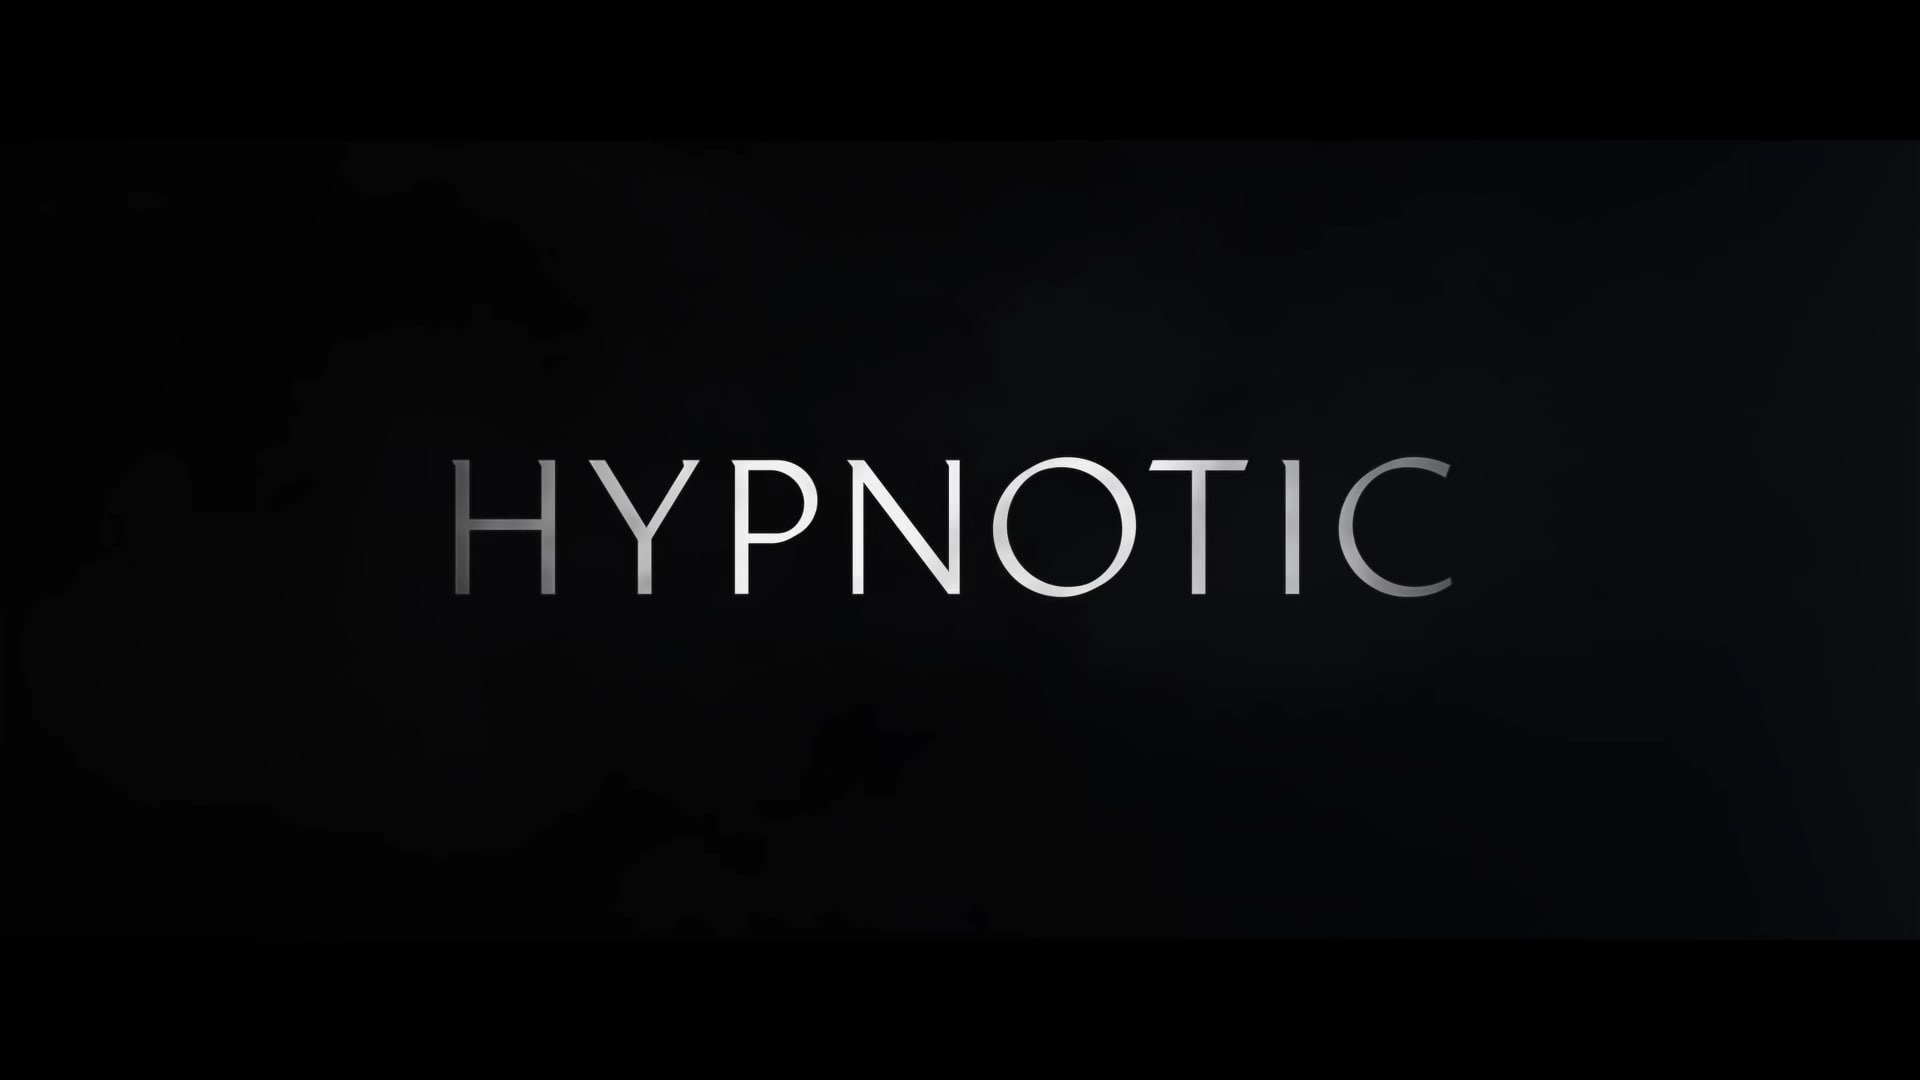 Netflix Hypnotic Trailer, Coming to Netflix in October 2021